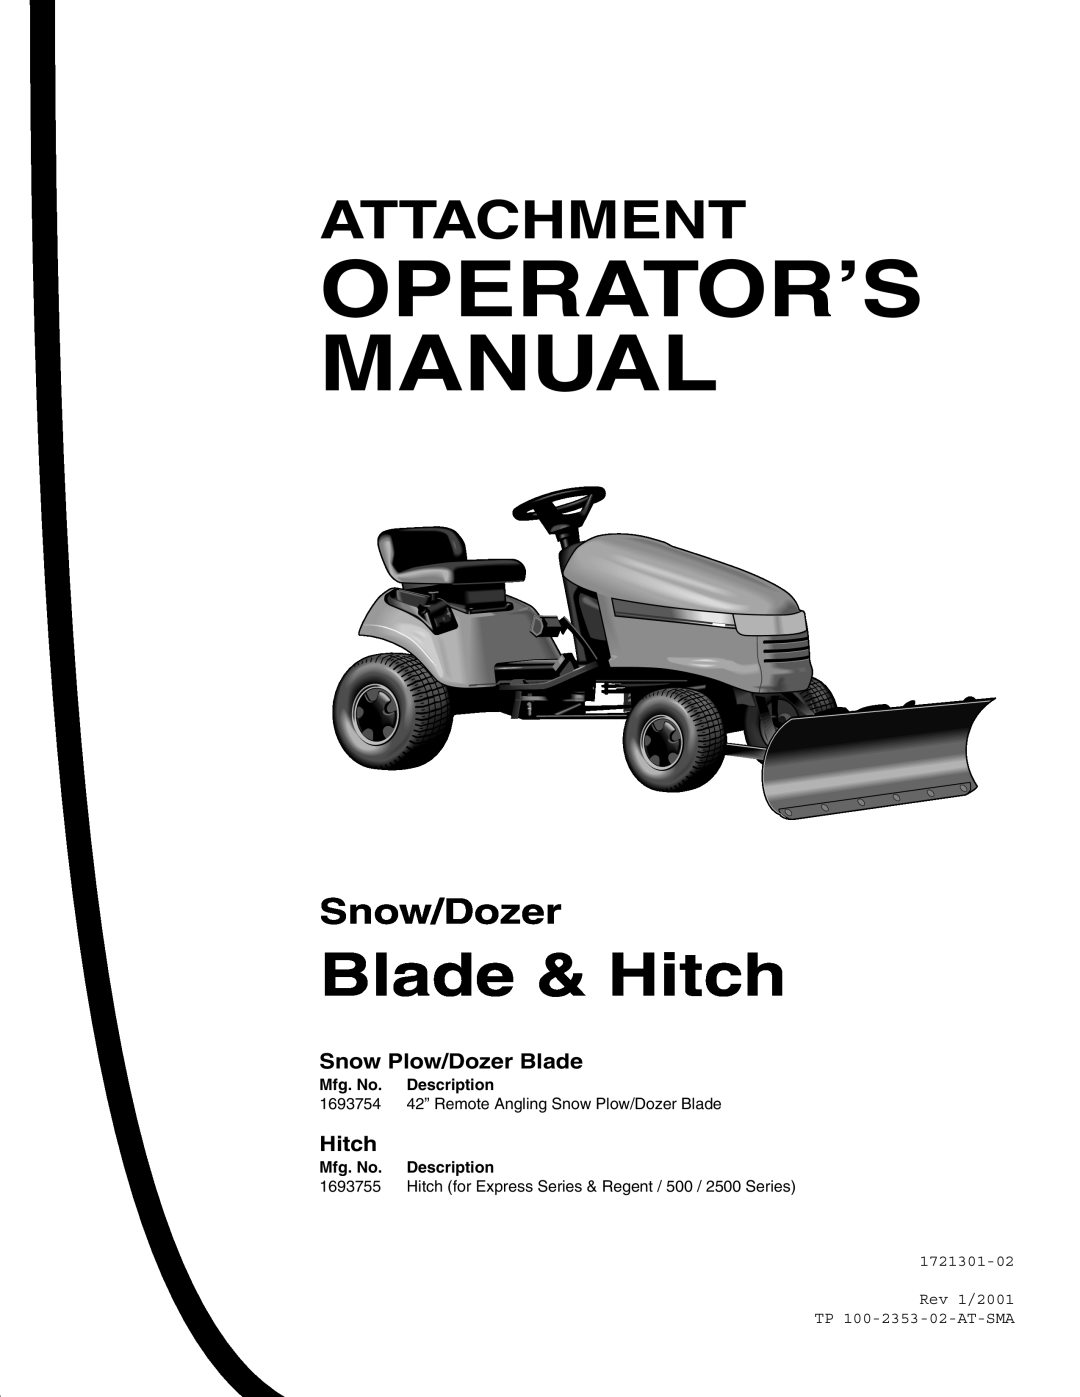 Snapper 1693755, 1721301-02 manual Snow Plow/Dozer Blade, Operator’S Manual, Blade & Hitch, Attachment, Snow/Dozer 